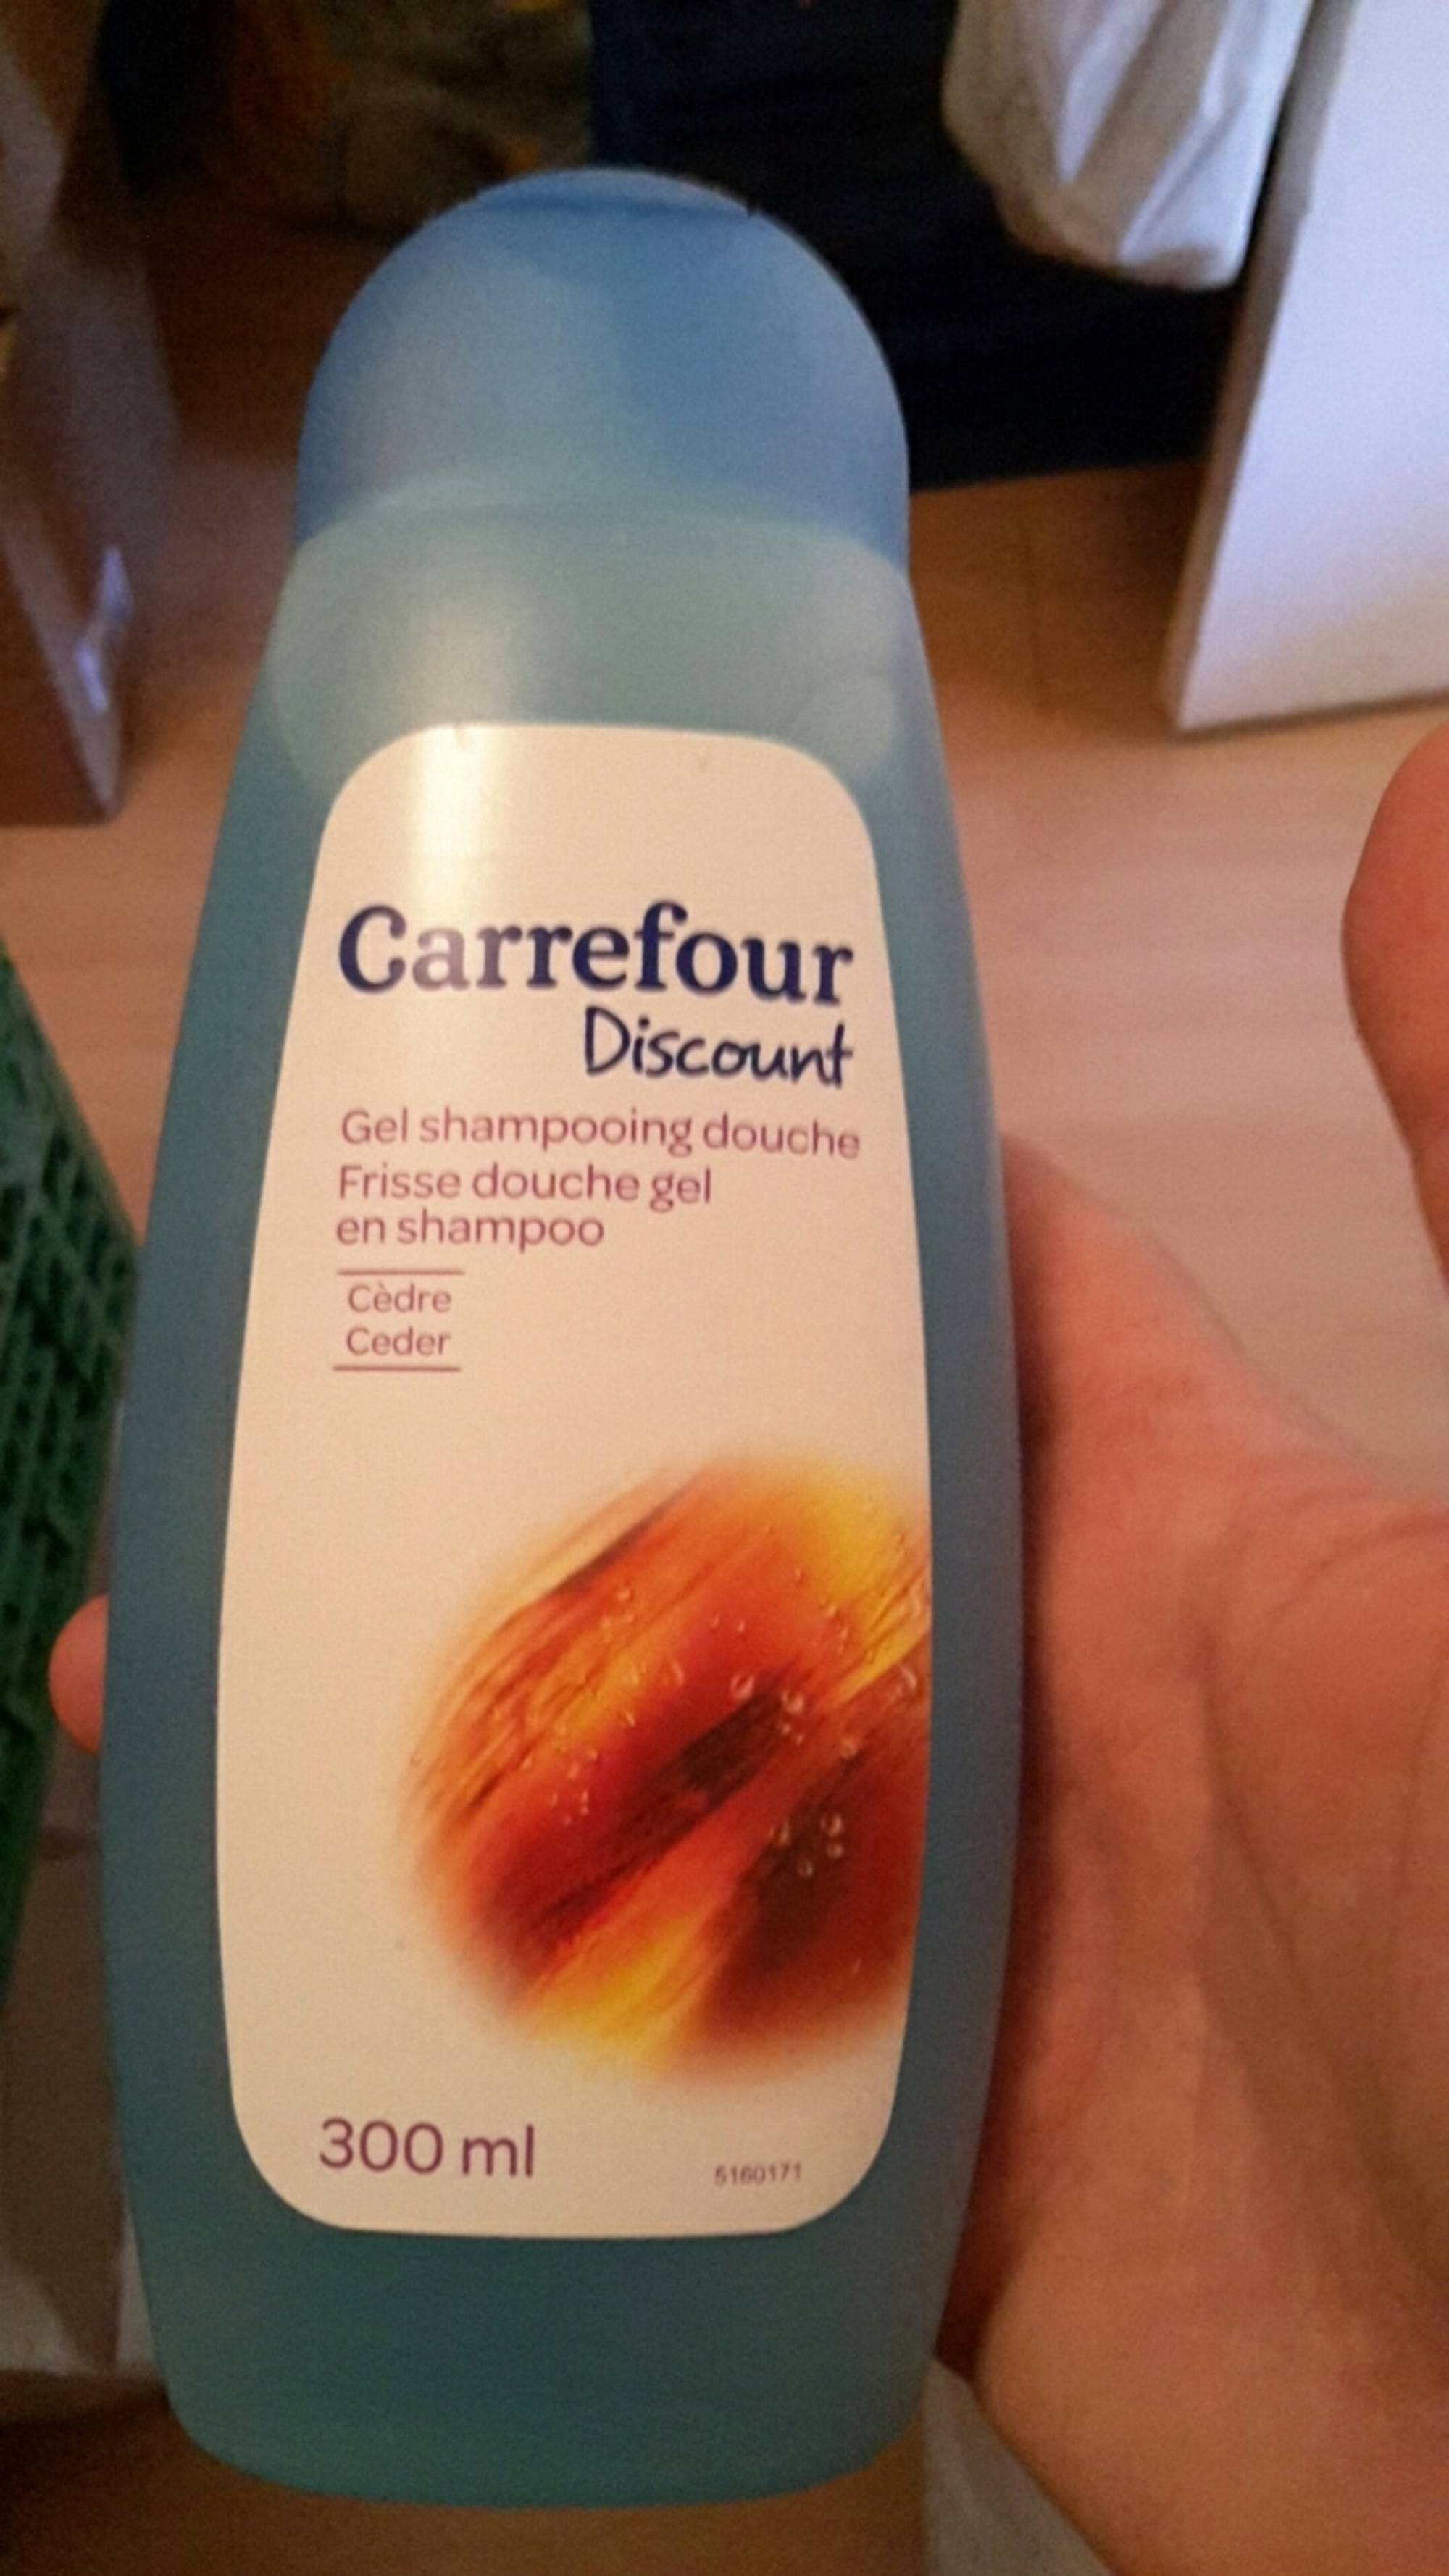 CARREFOUR - Discount - Gel shampooing douche Cèdre